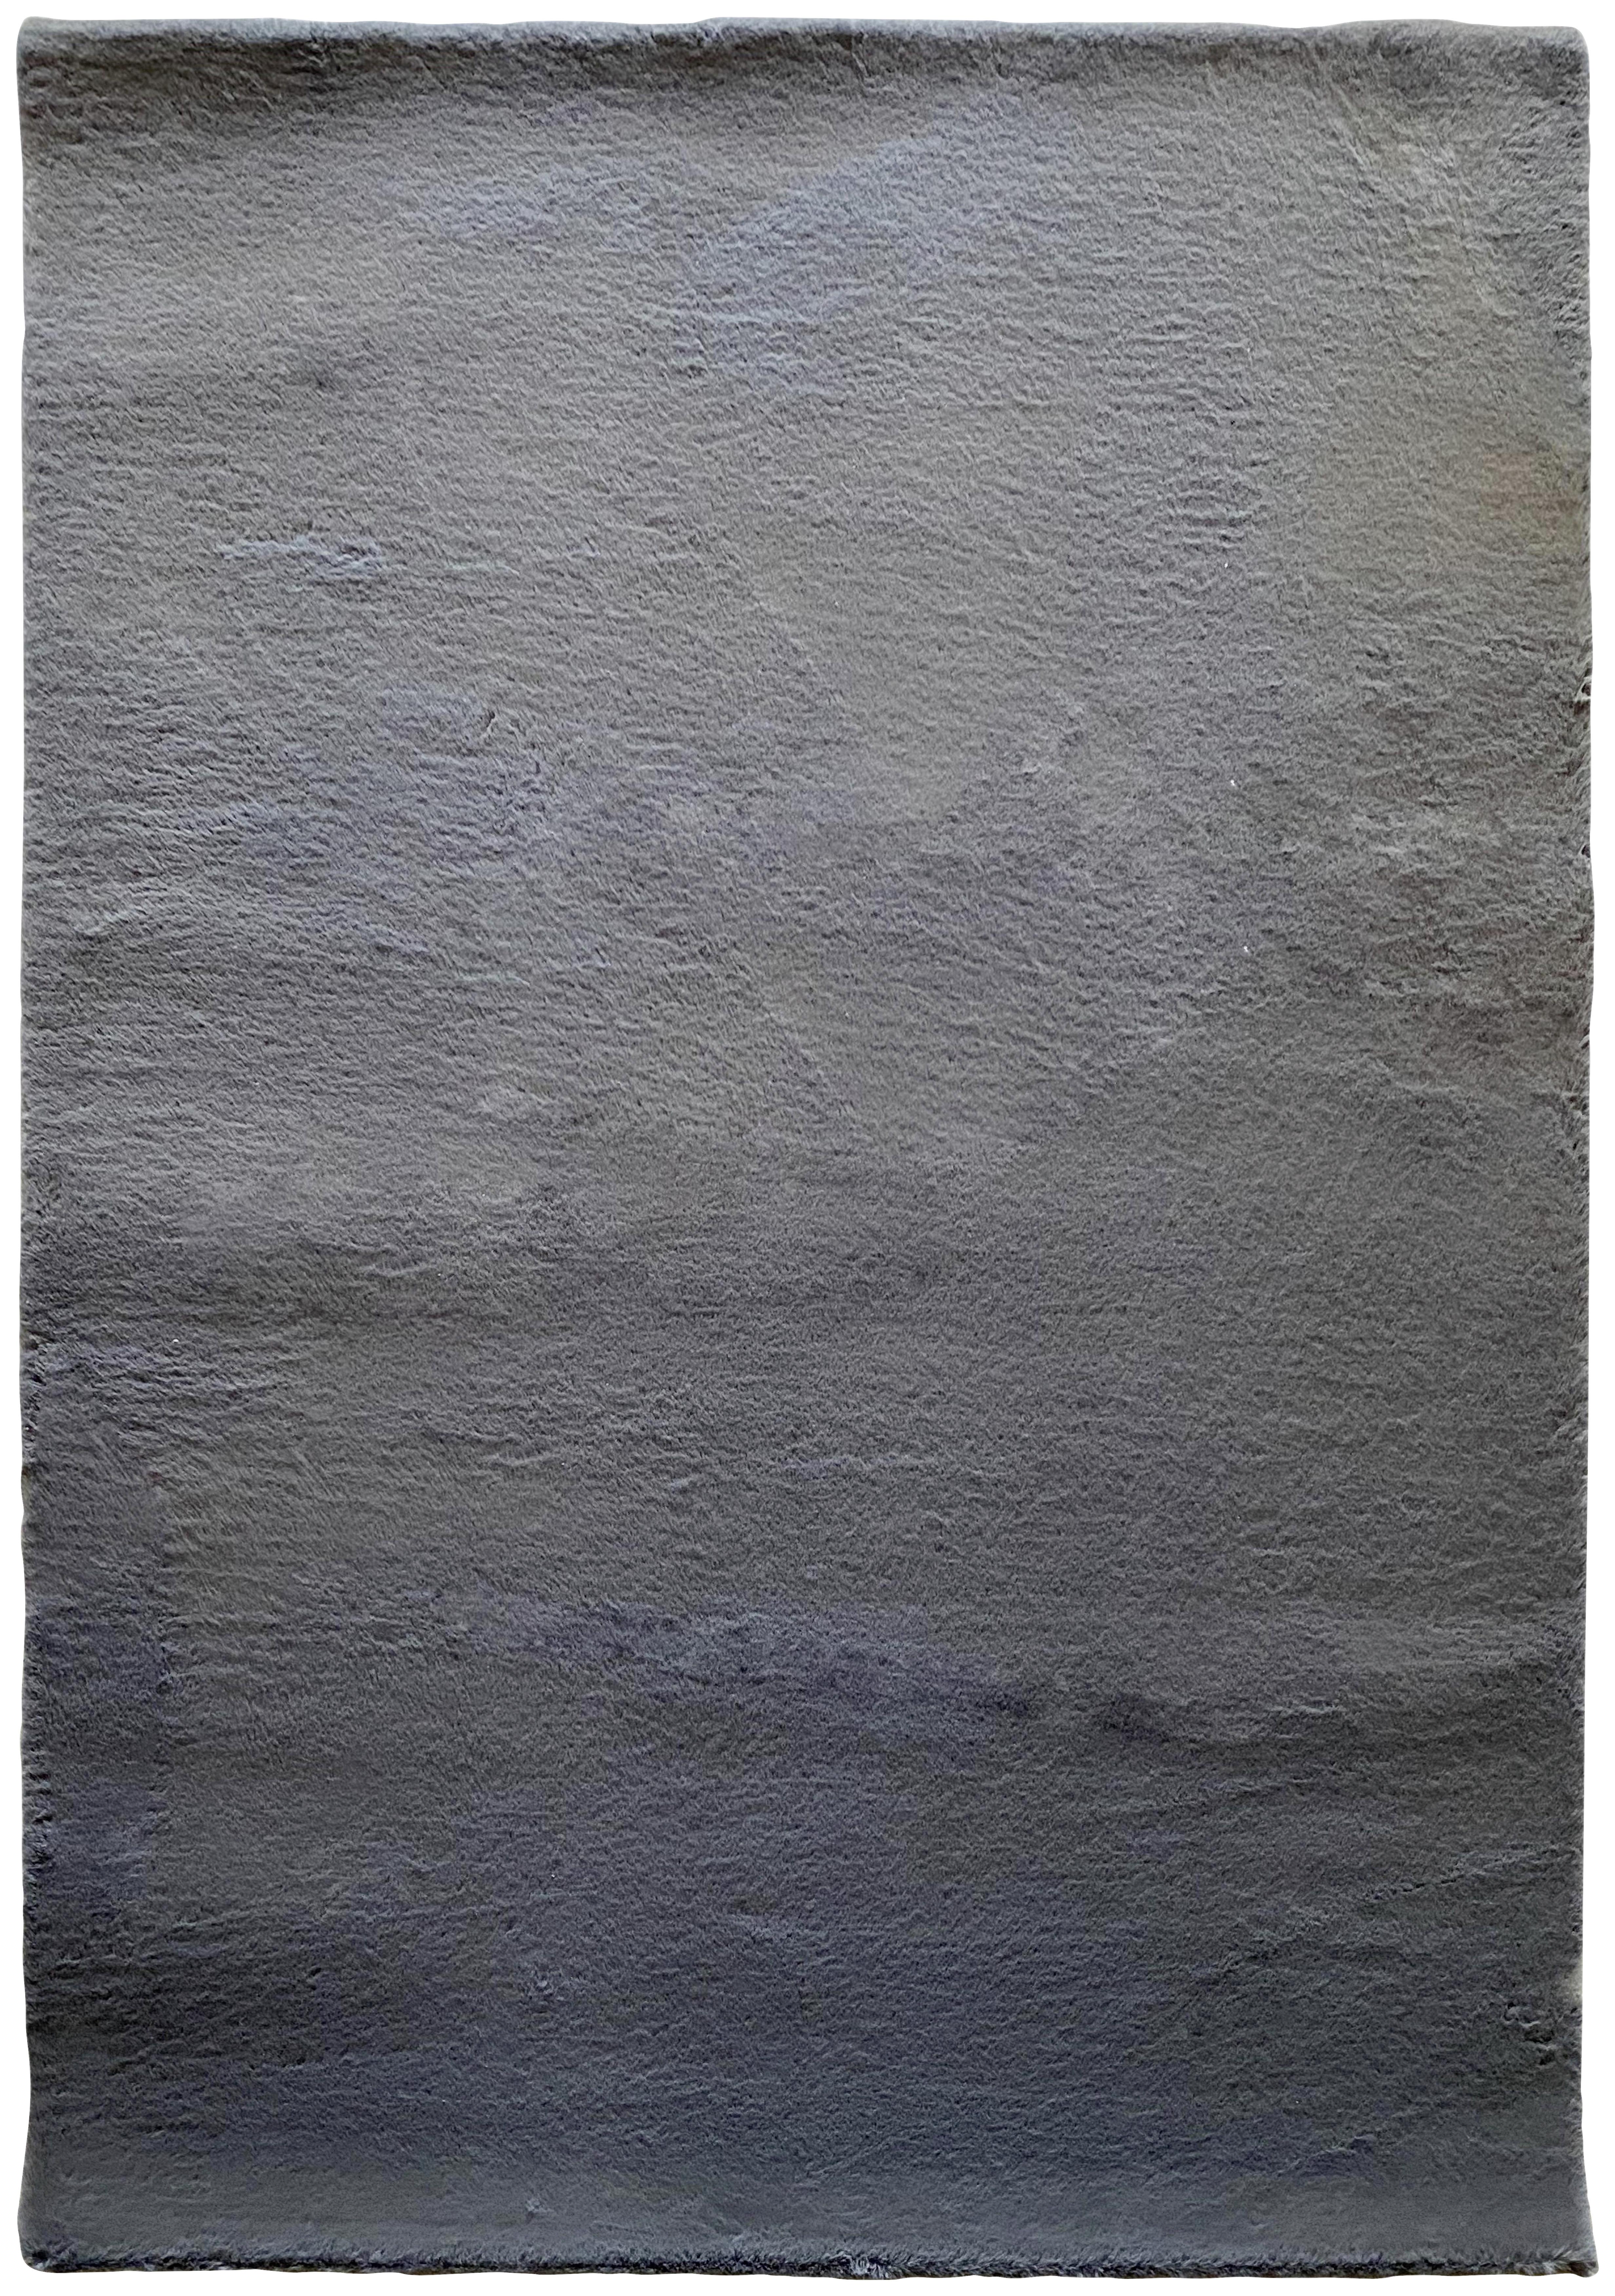 Fellteppich Margarete Dunkelgrau 160x220 cm - Dunkelgrau, MODERN, Textil (160/220cm) - Luca Bessoni